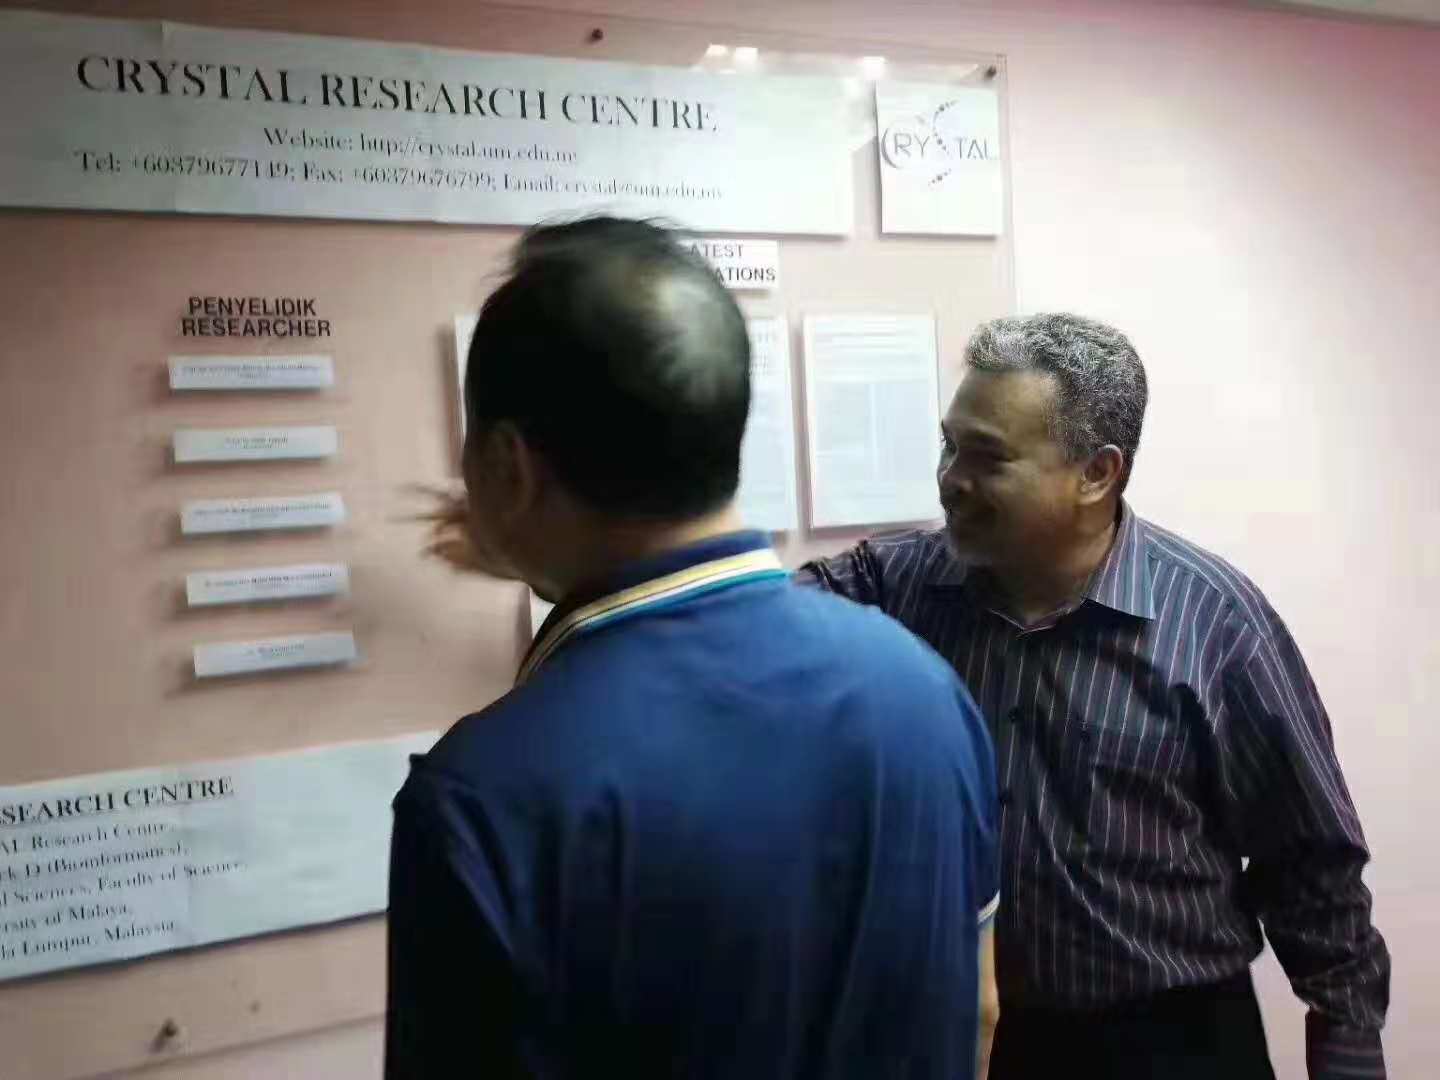 On 8.14's morning innoscience visited university of malaya bioinformatics research